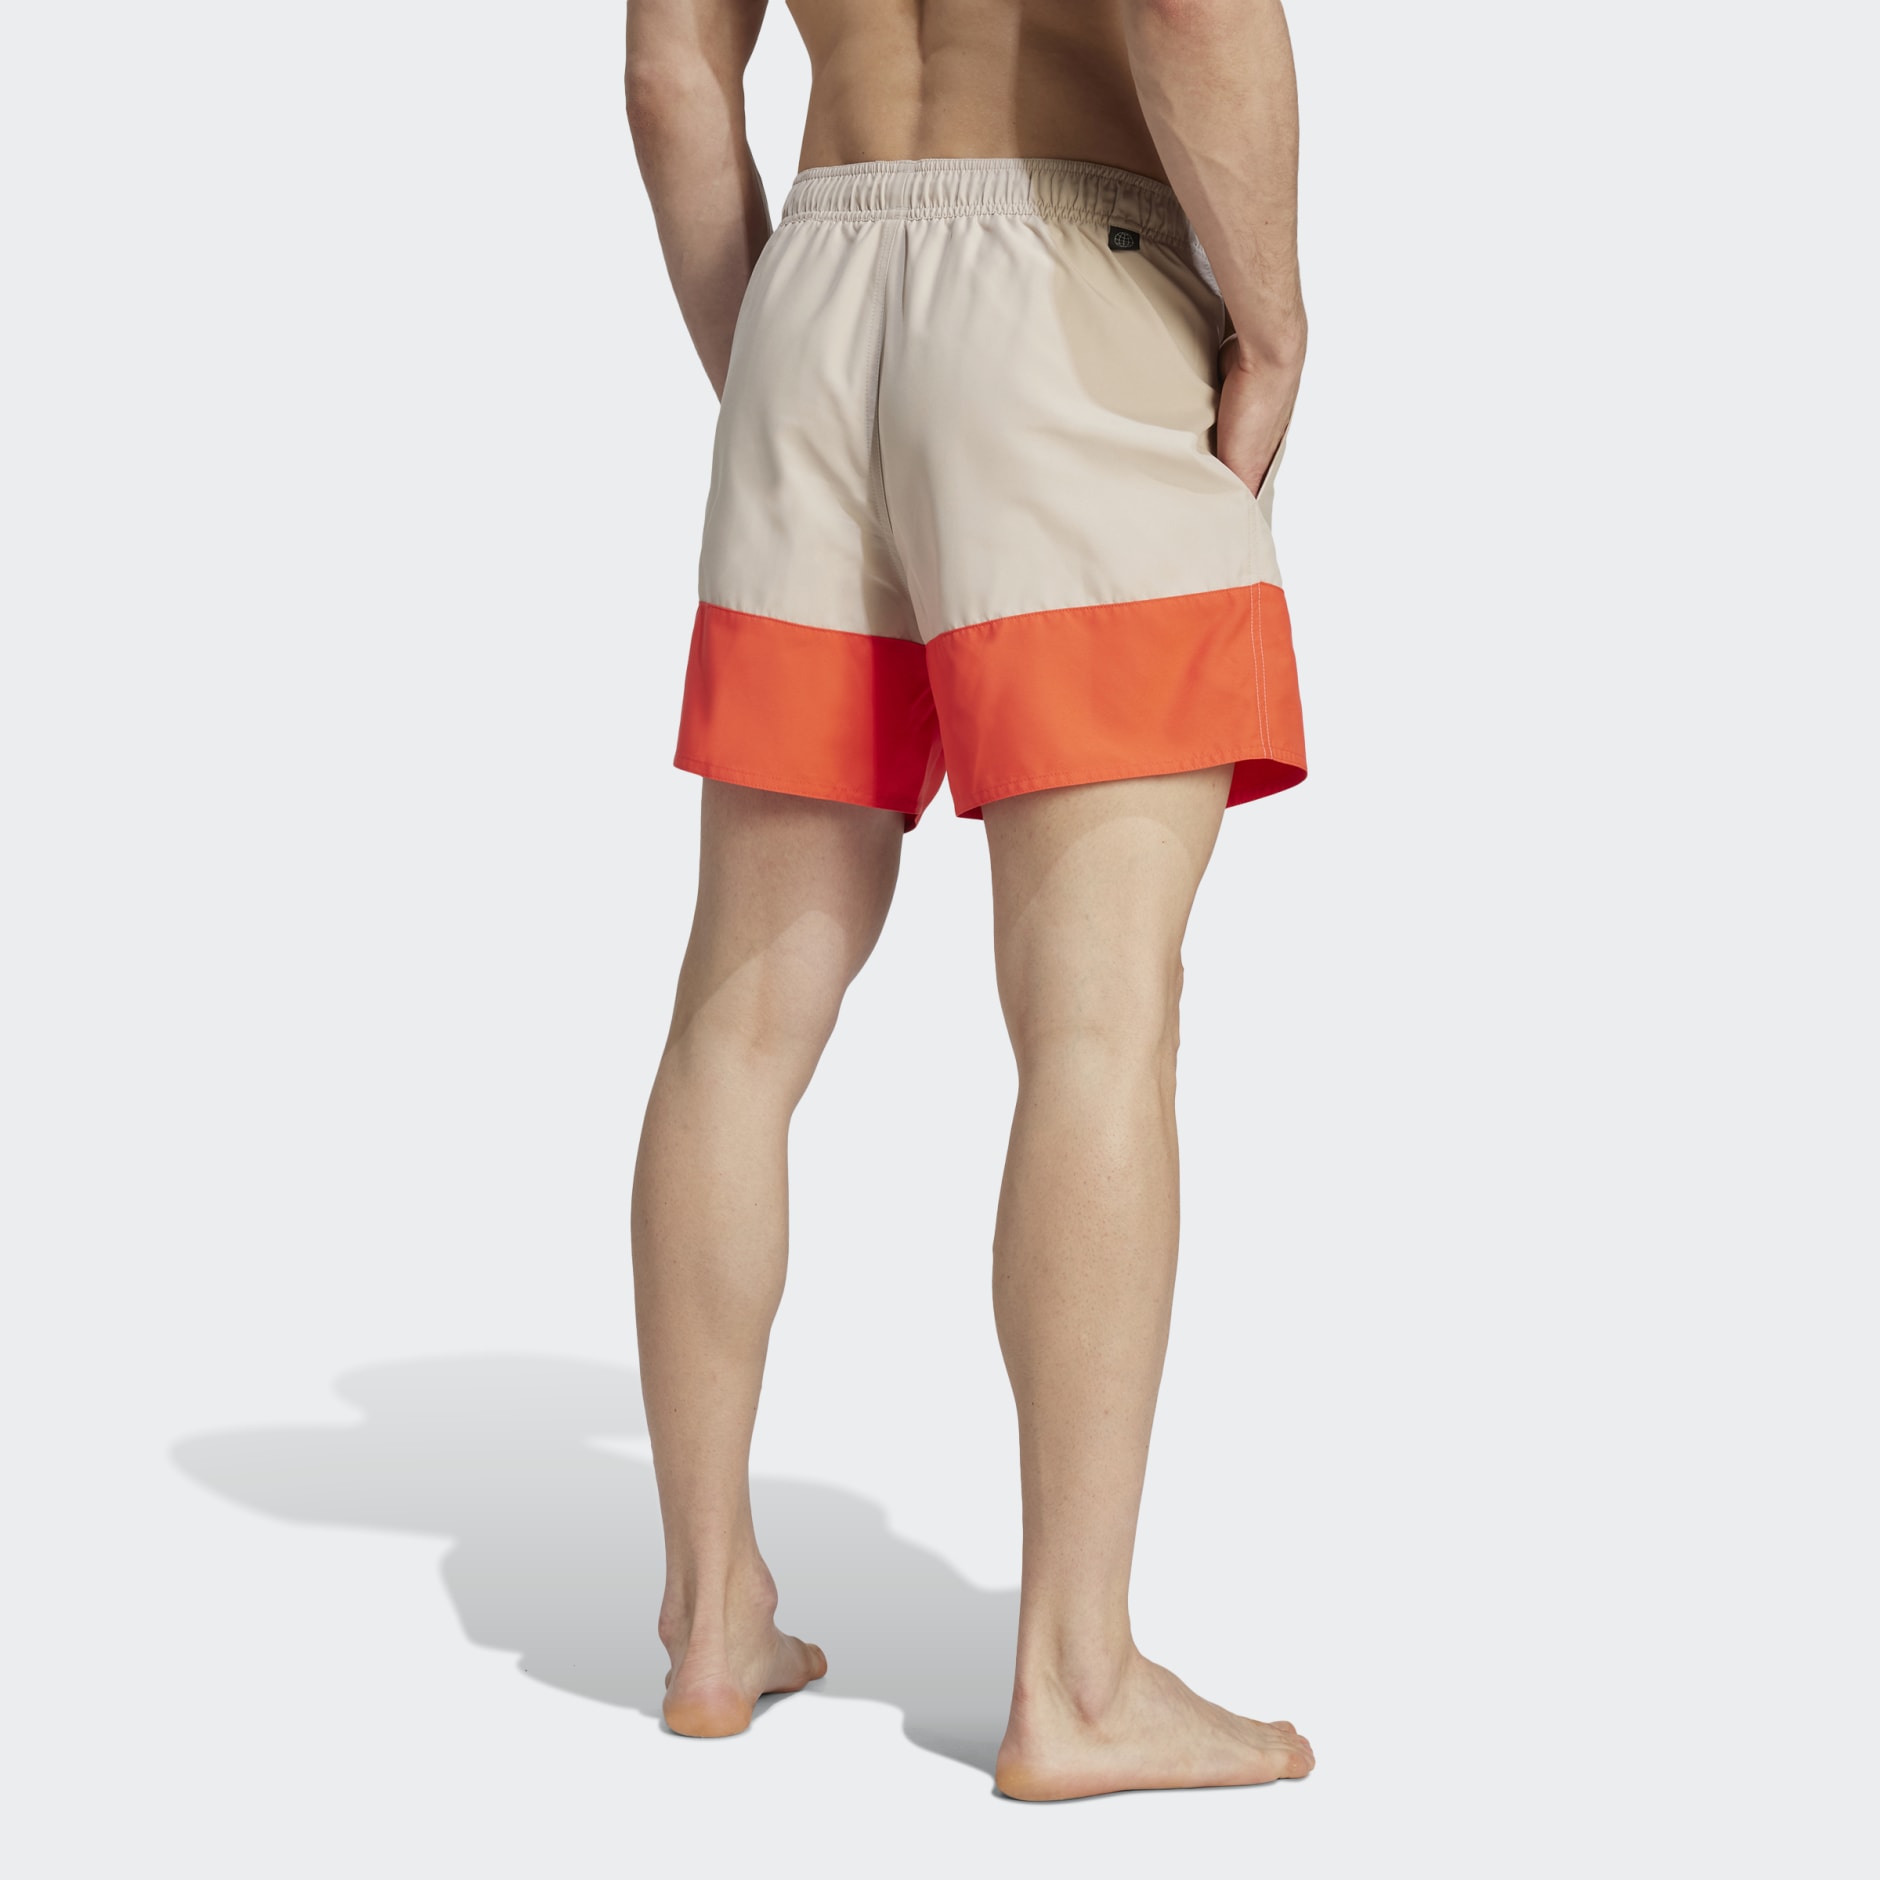 Men's Clothing - Colorblock Swim Shorts Short Length - Beige